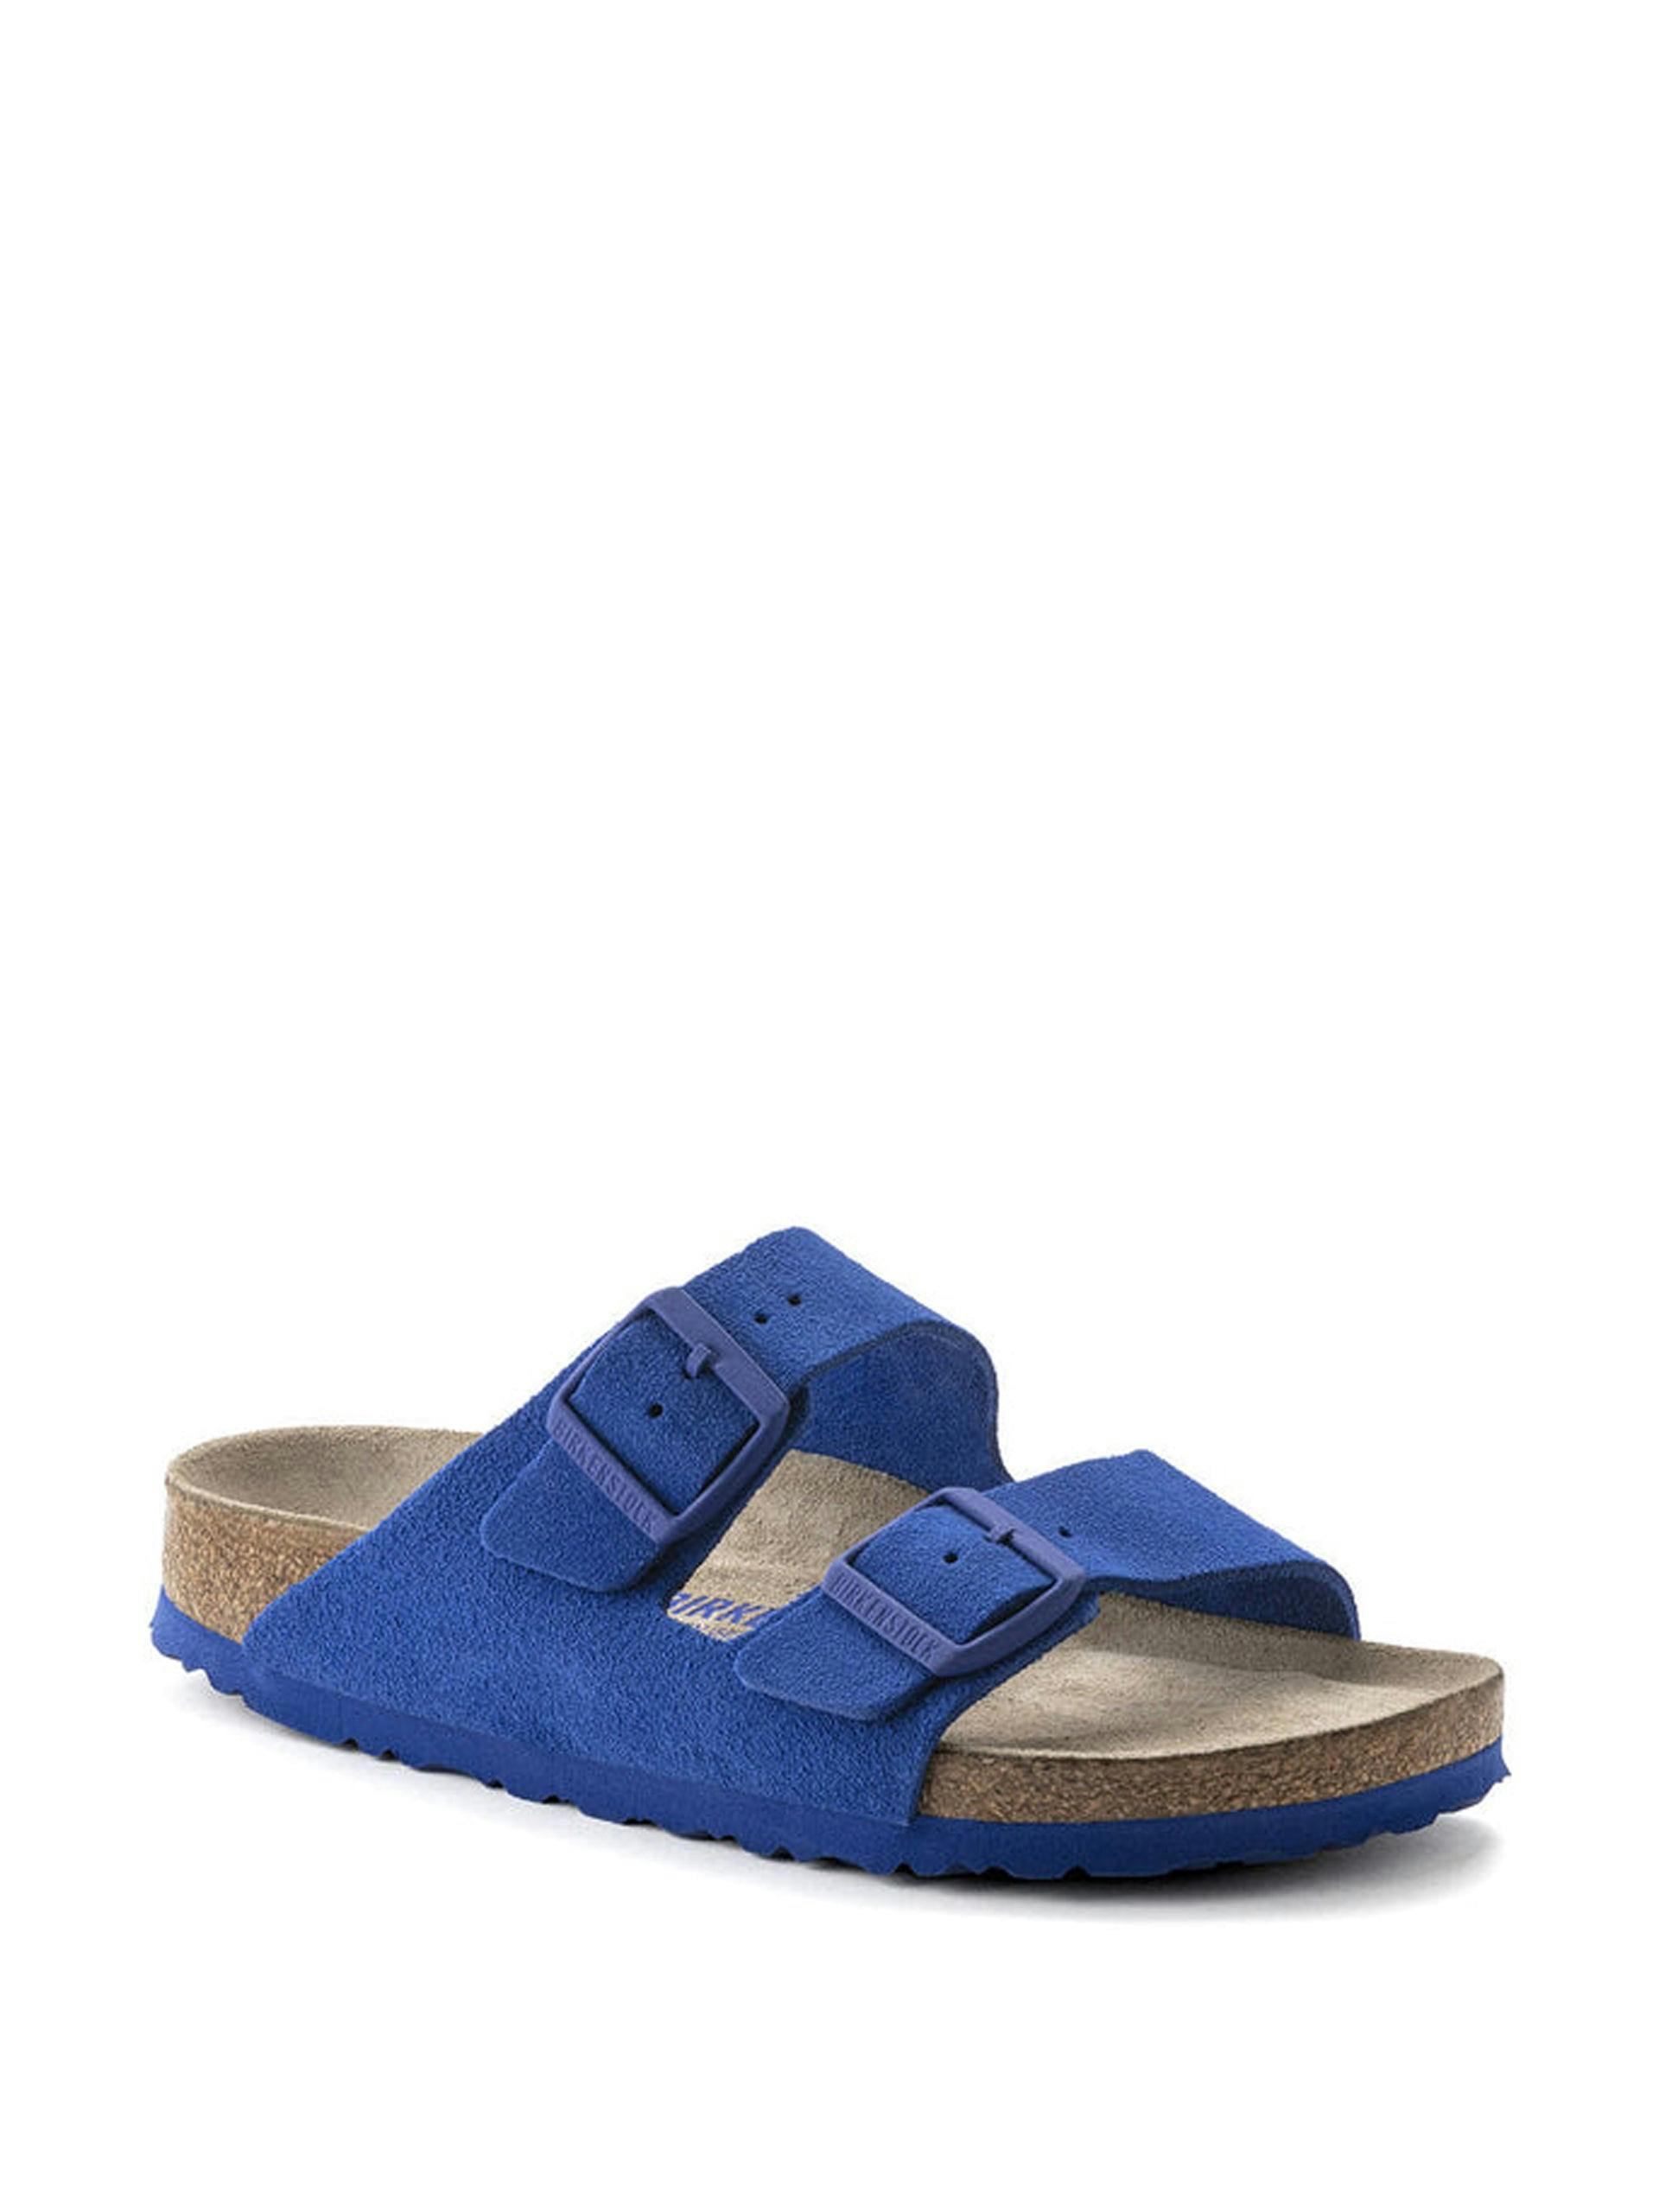 Blue double strap Arizona sandals